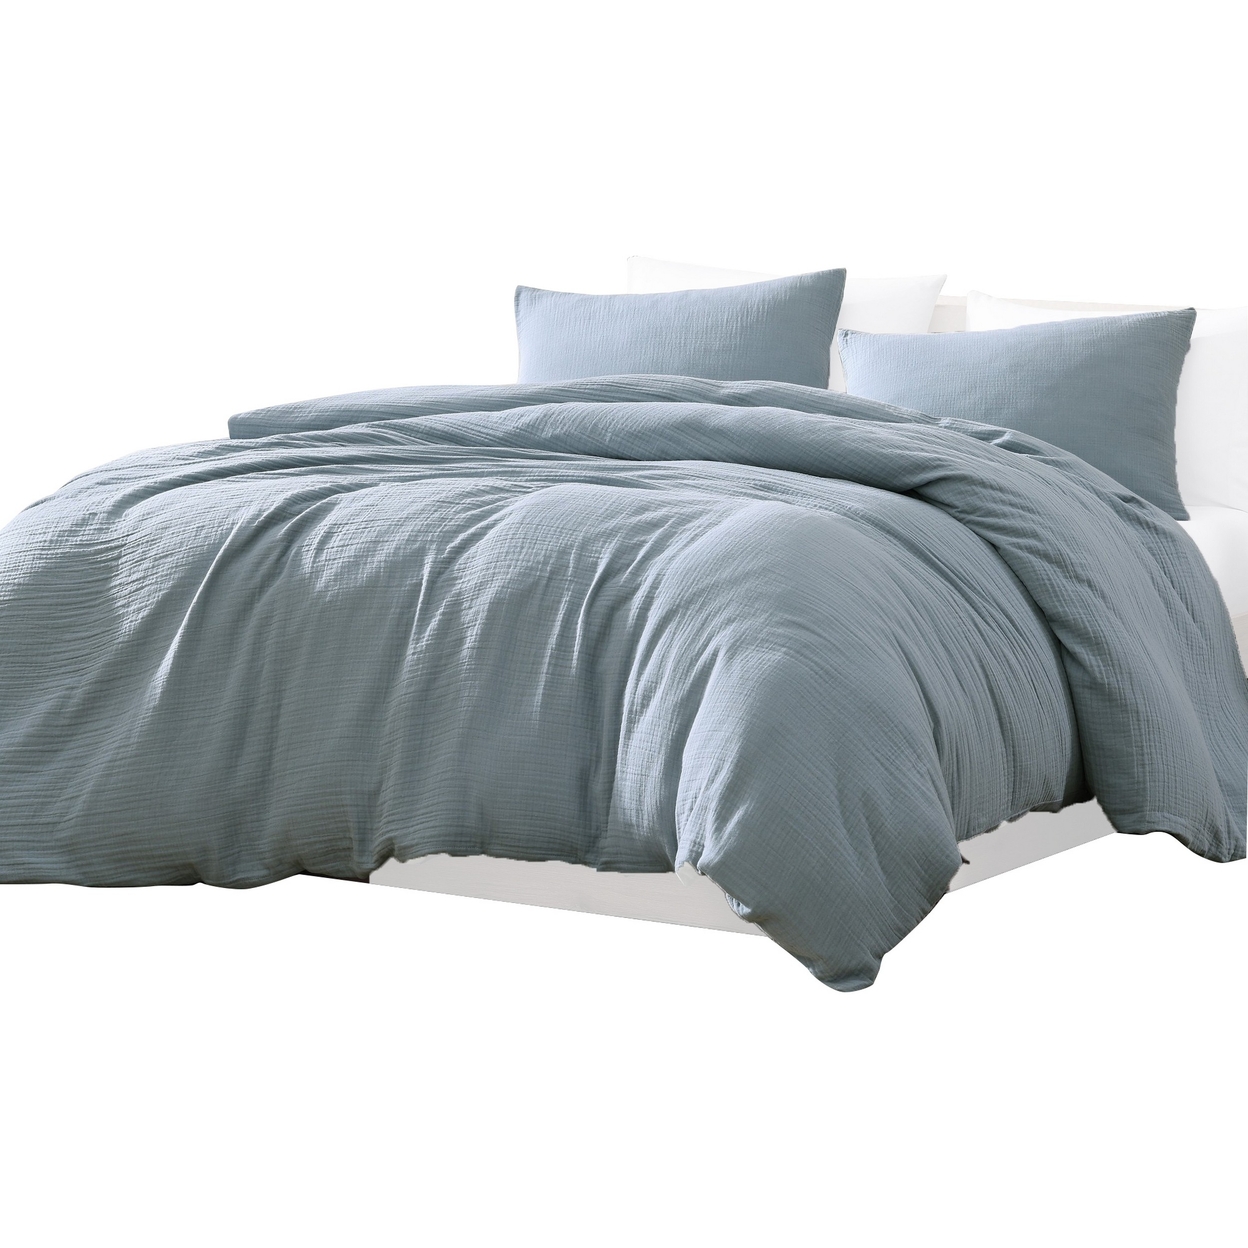 Uvi 3 Piece King Comforter Set, Cotton, Natural Crinkled Texture, Blue - Saltoro Sherpi